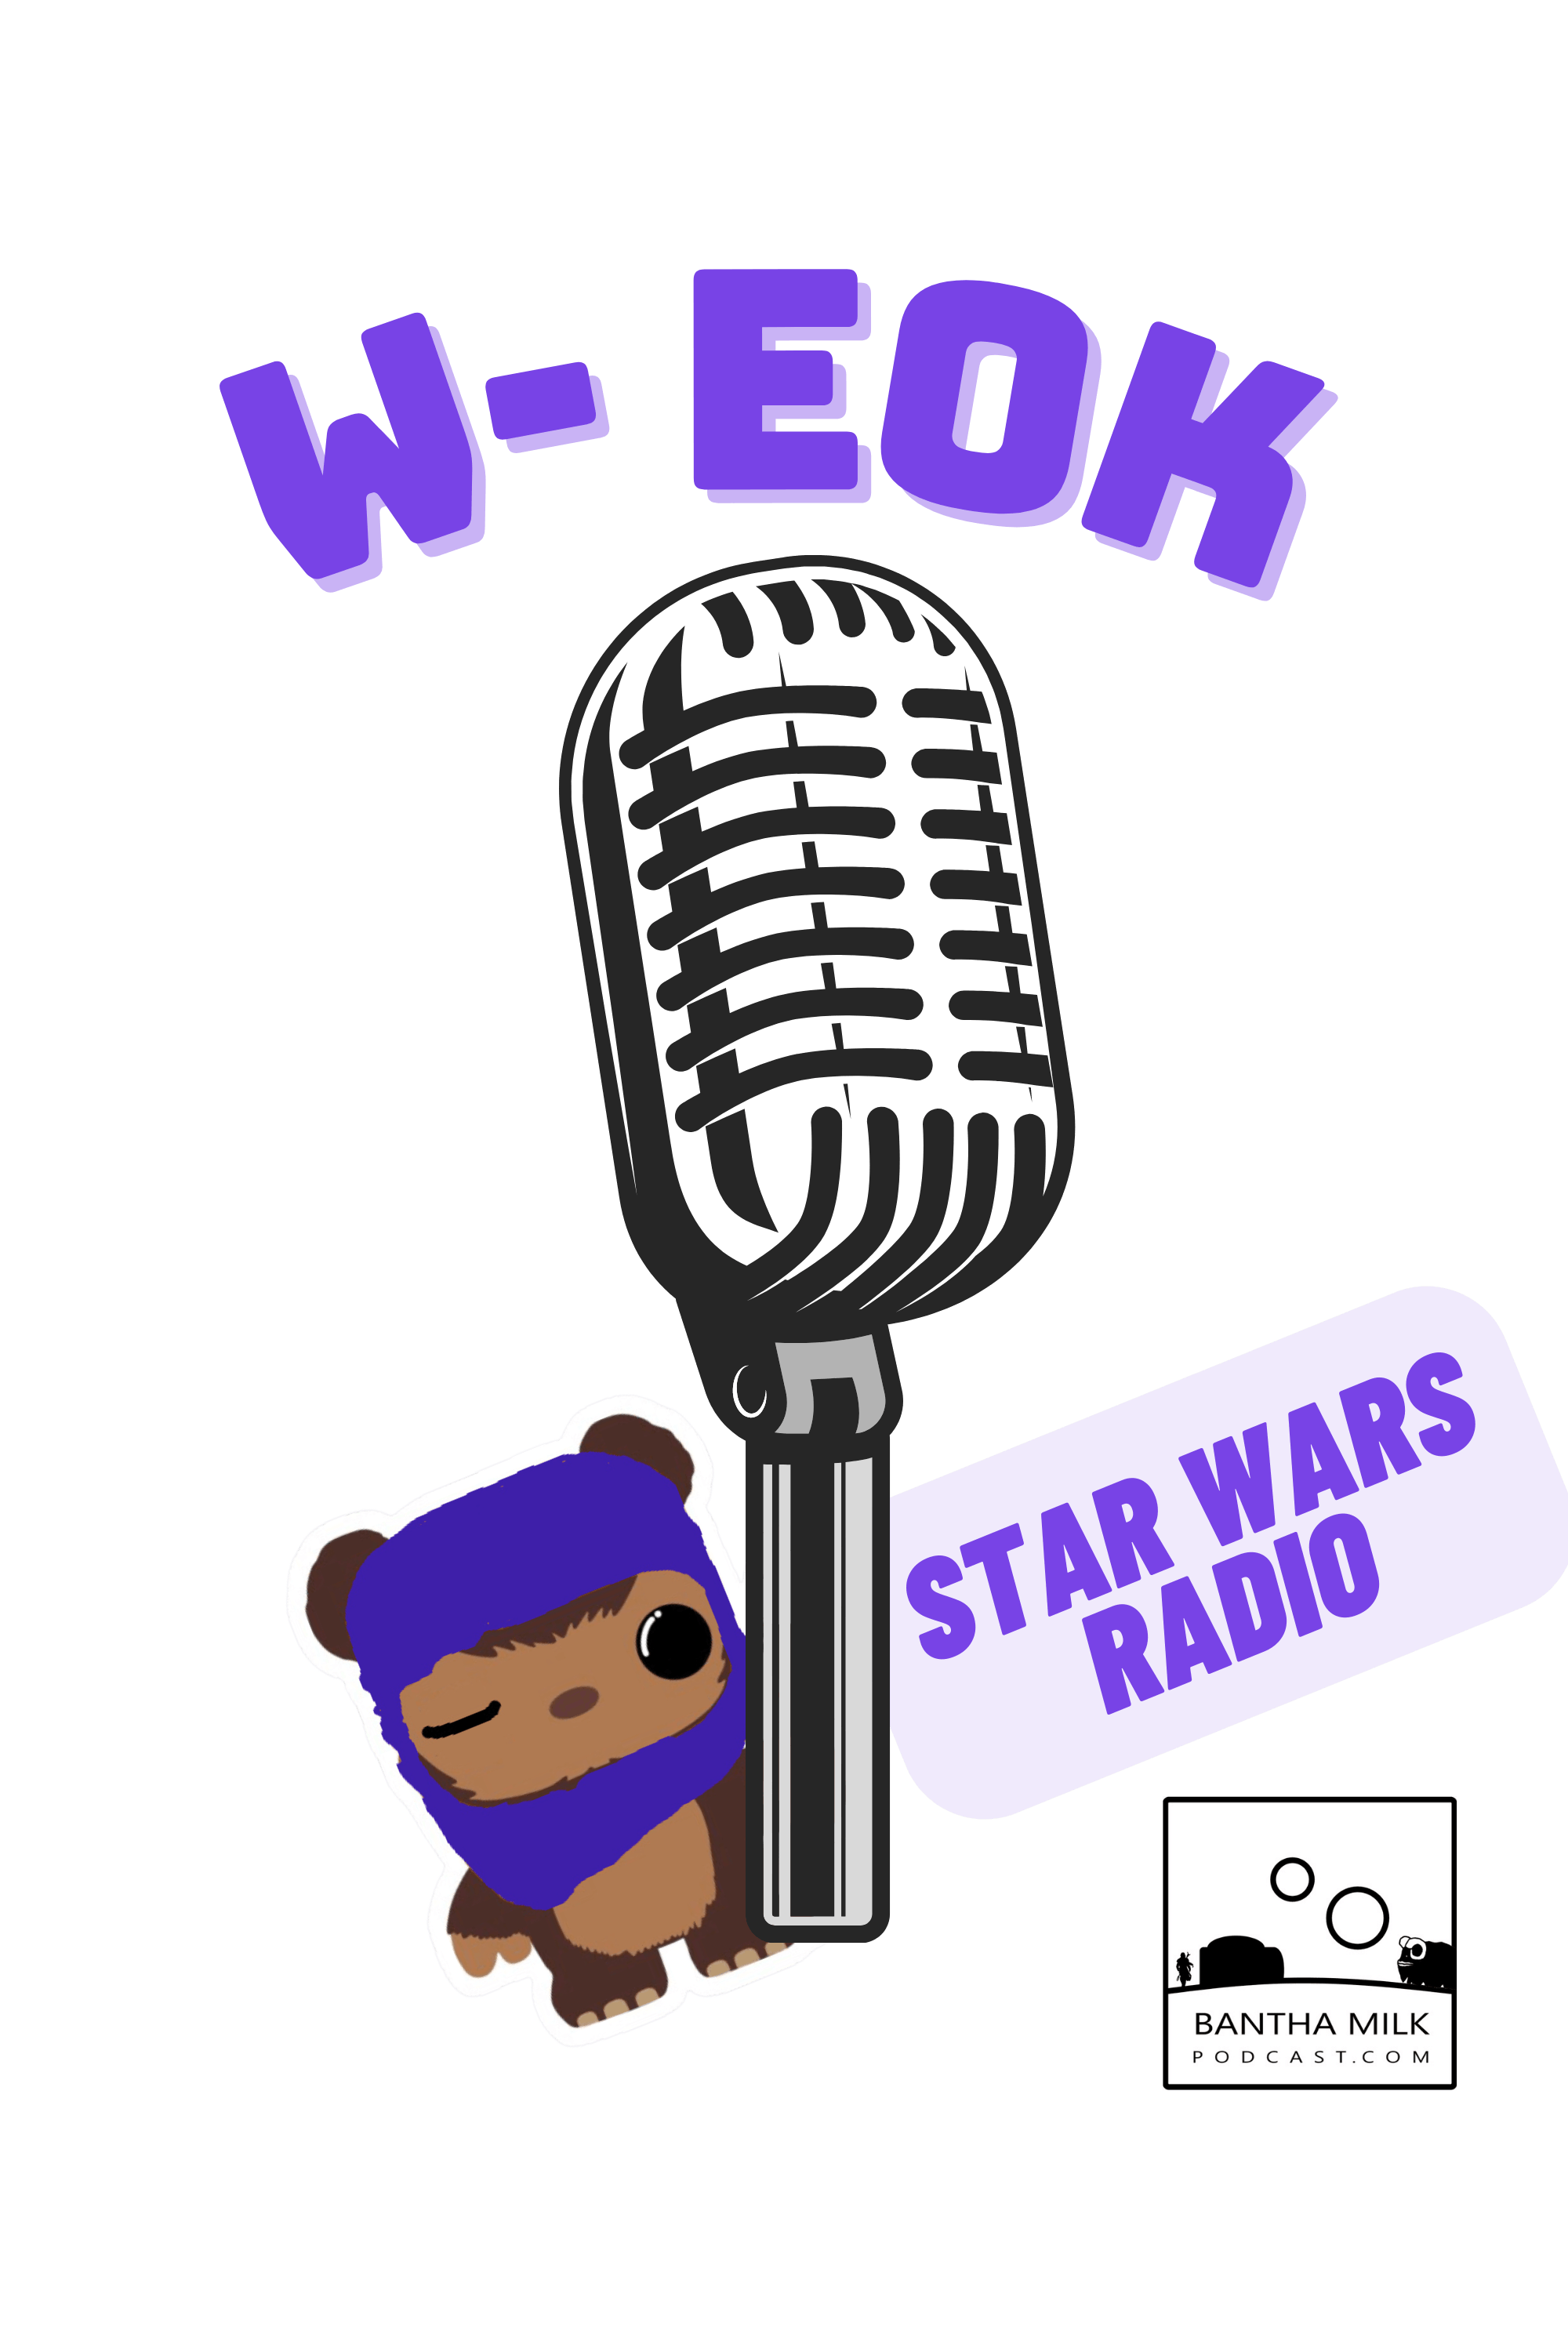 Bantha Milk Podcast Presents W-EOK Star Wars Radio